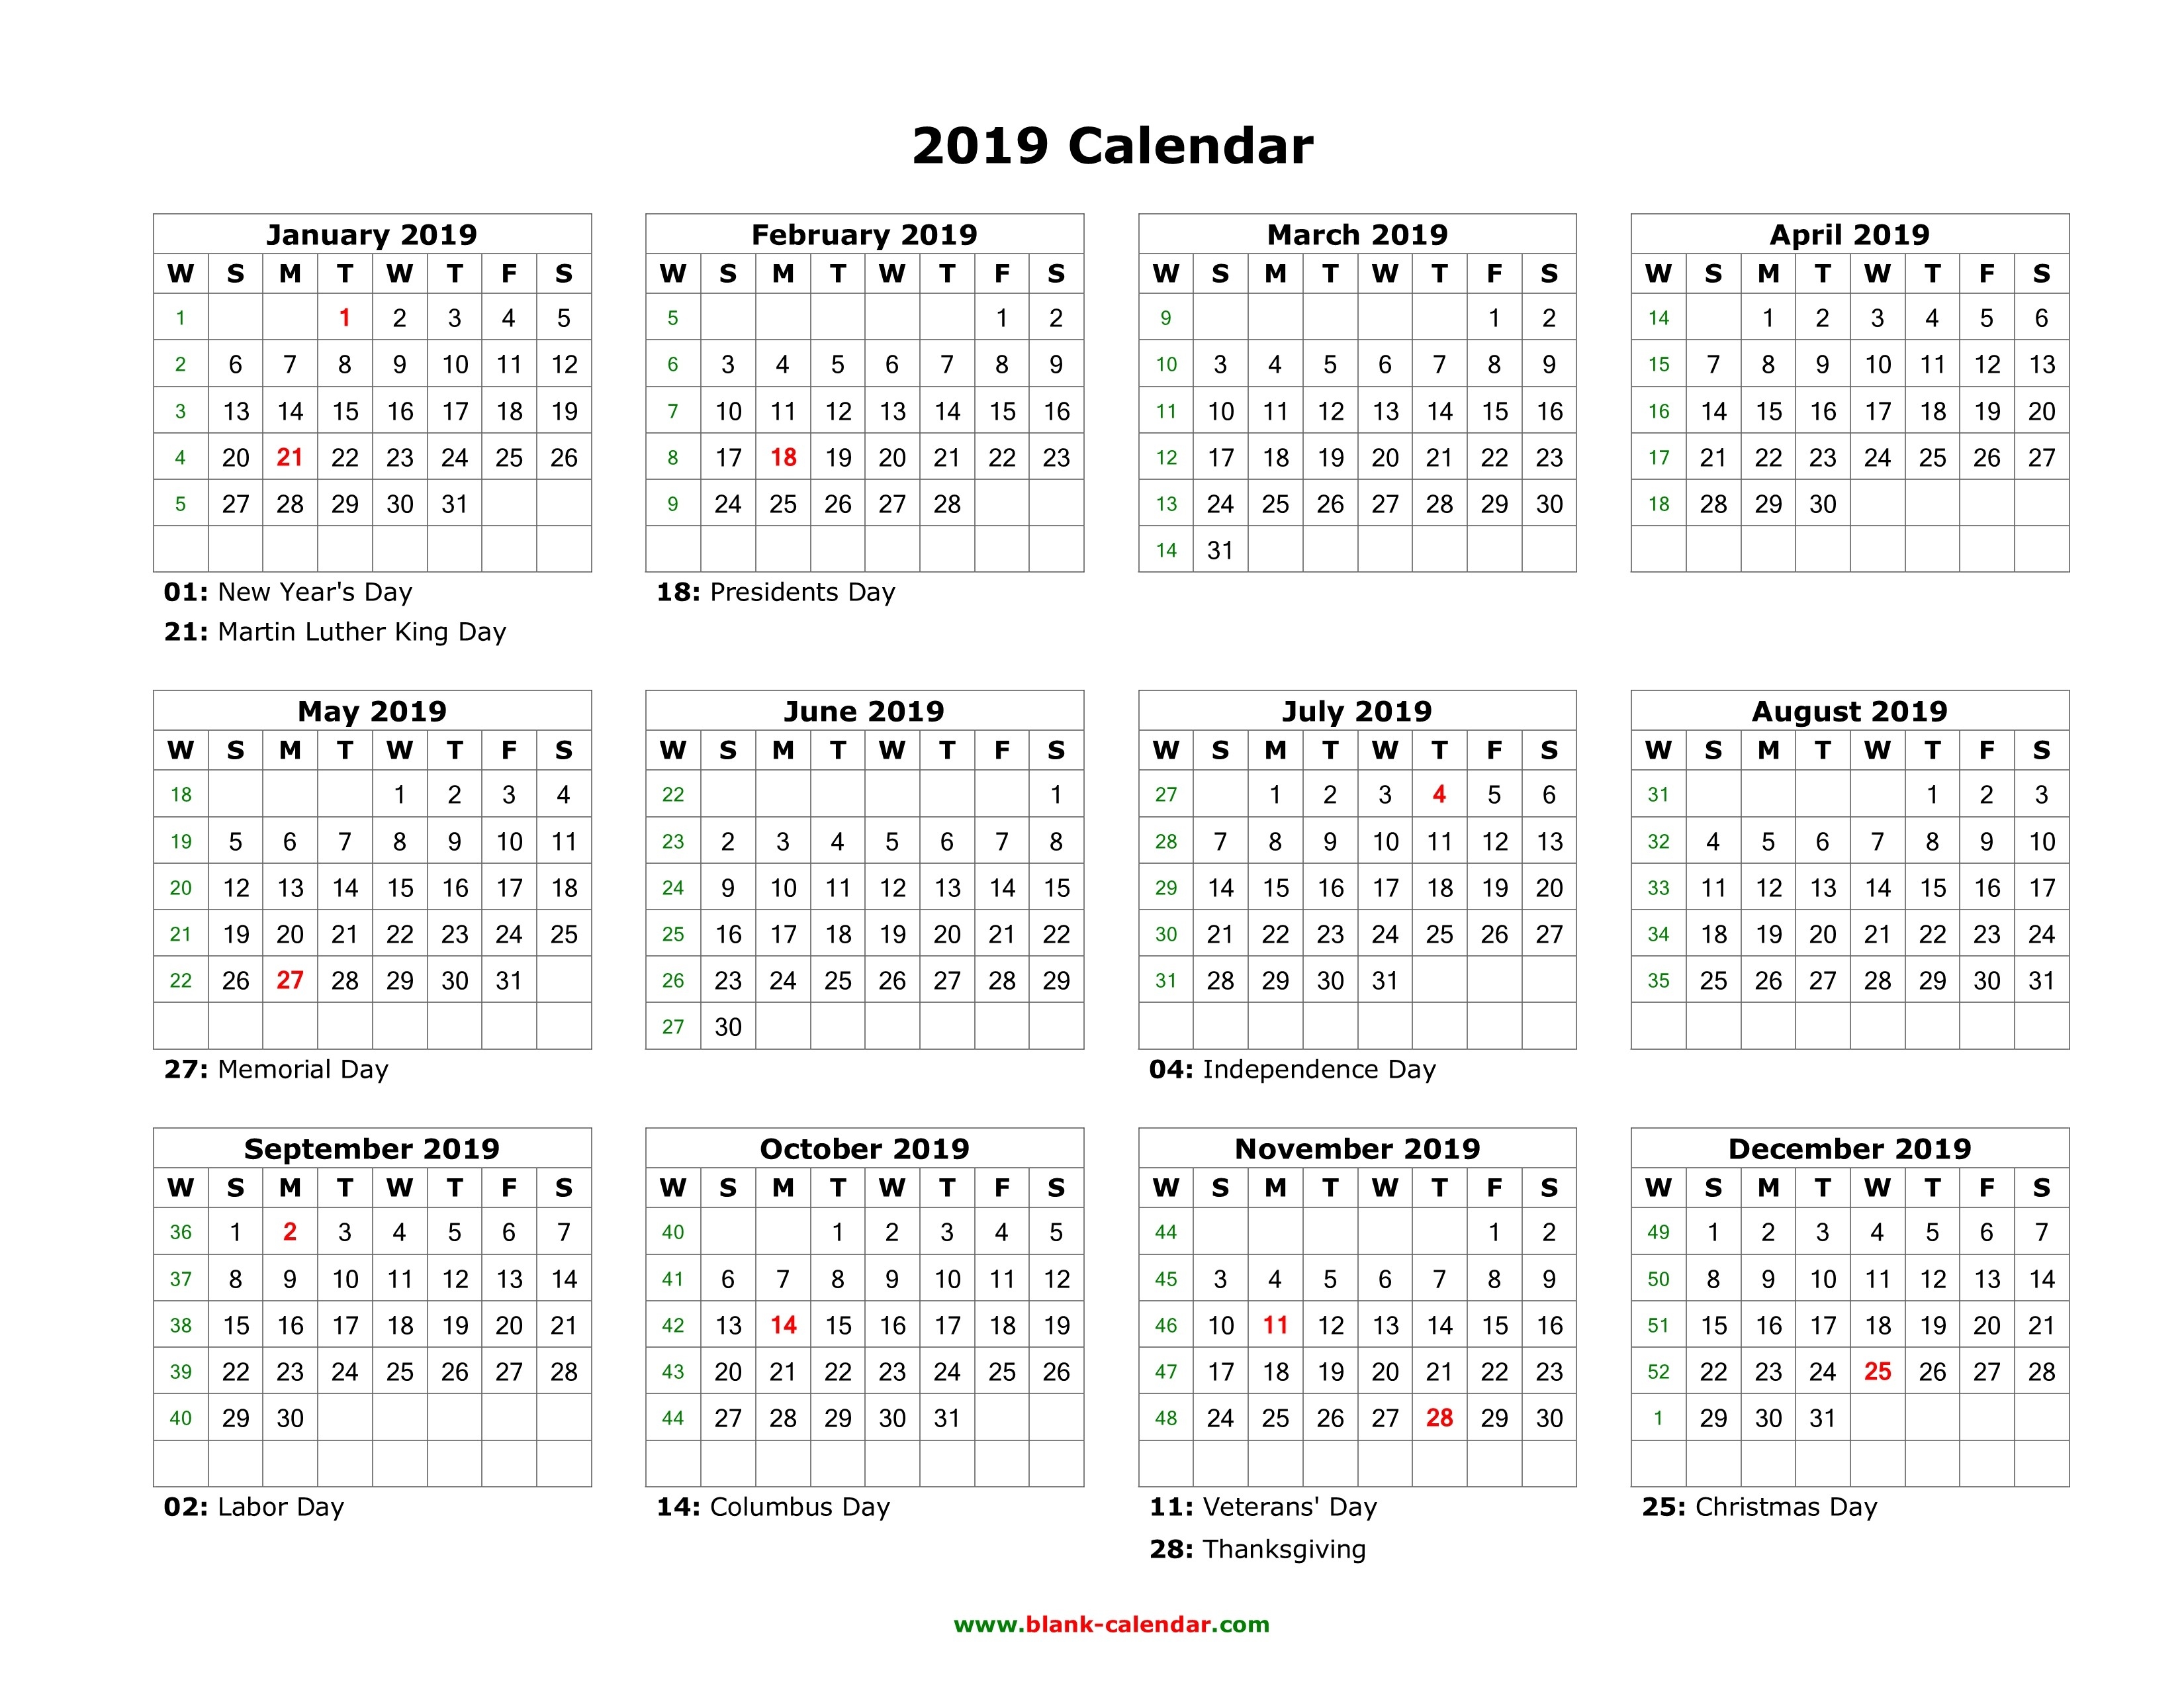 Blank Calendar 2019 | Free Download Calendar Templates-Blank Calendar With Week Numbers